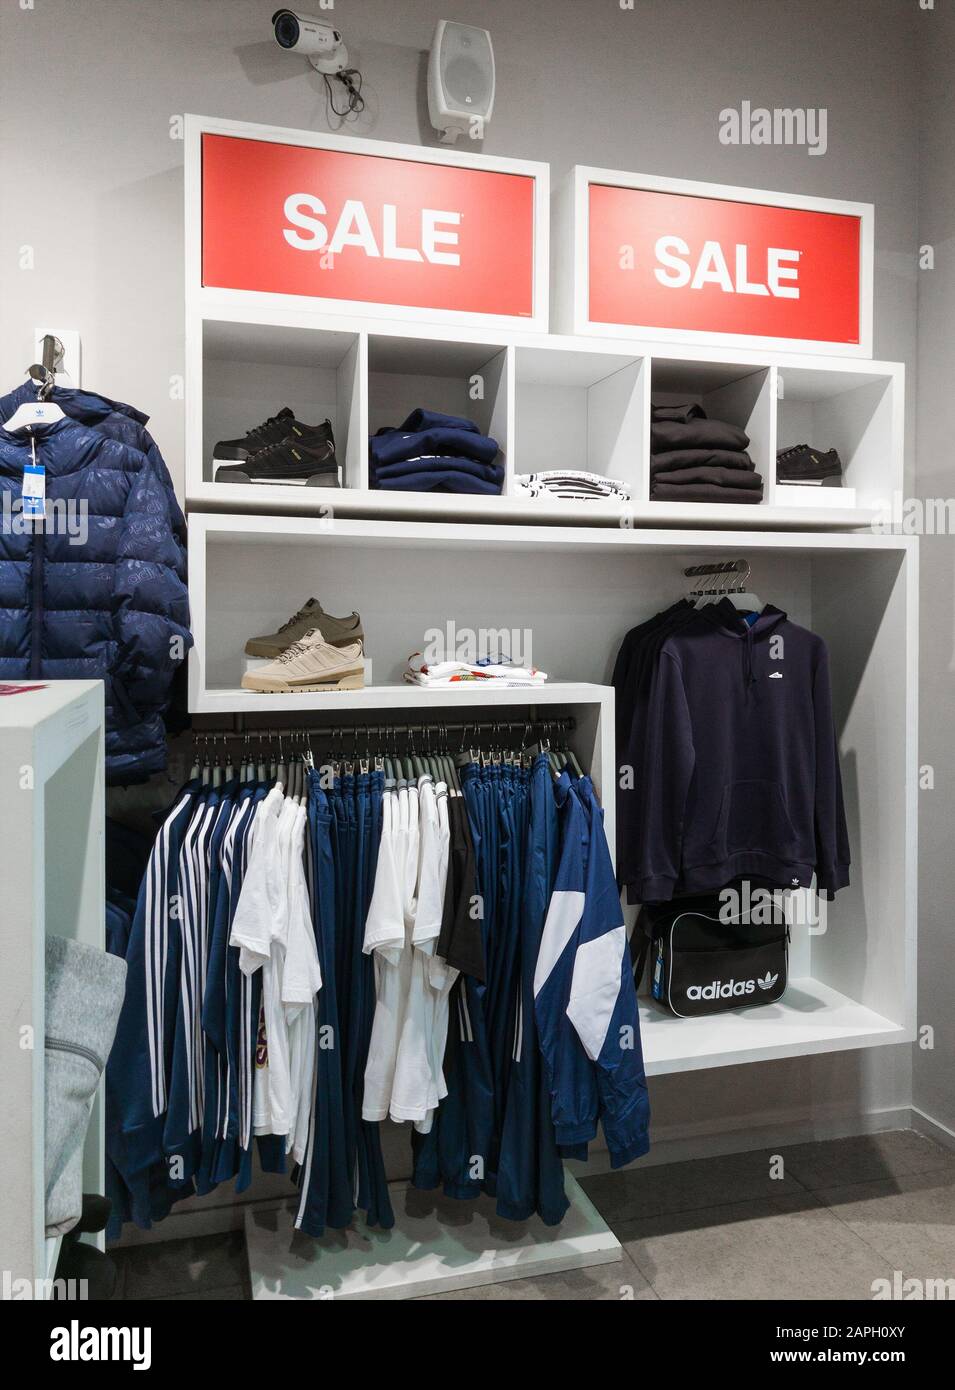 Sell Adidas Clothing Shop, 55%.